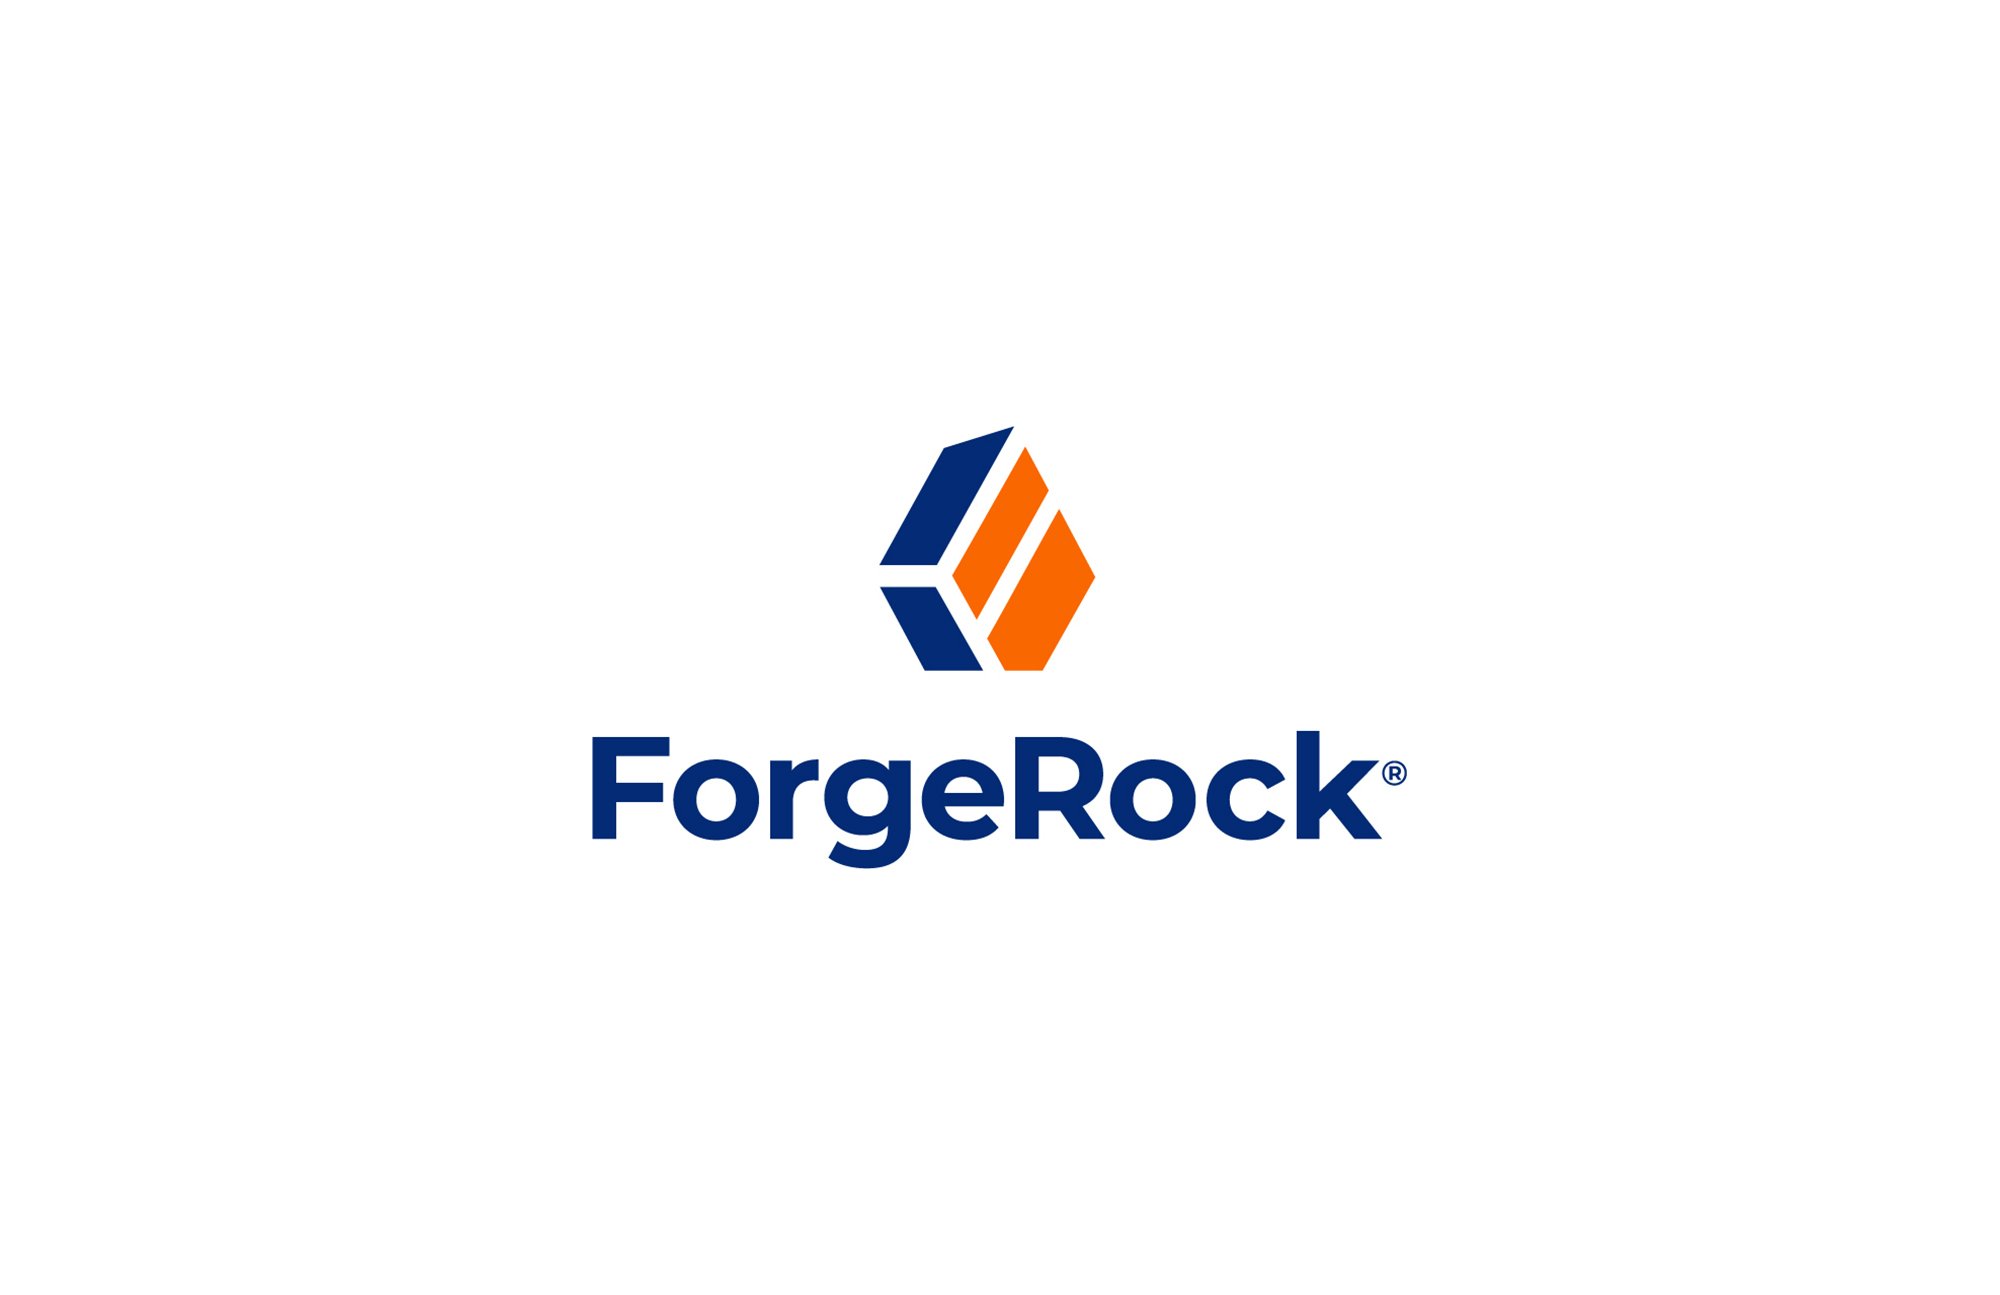 https://storage.googleapis.com/gweb-cloudblog-publish/images/forgerock_logo.max-2000x2000.jpg